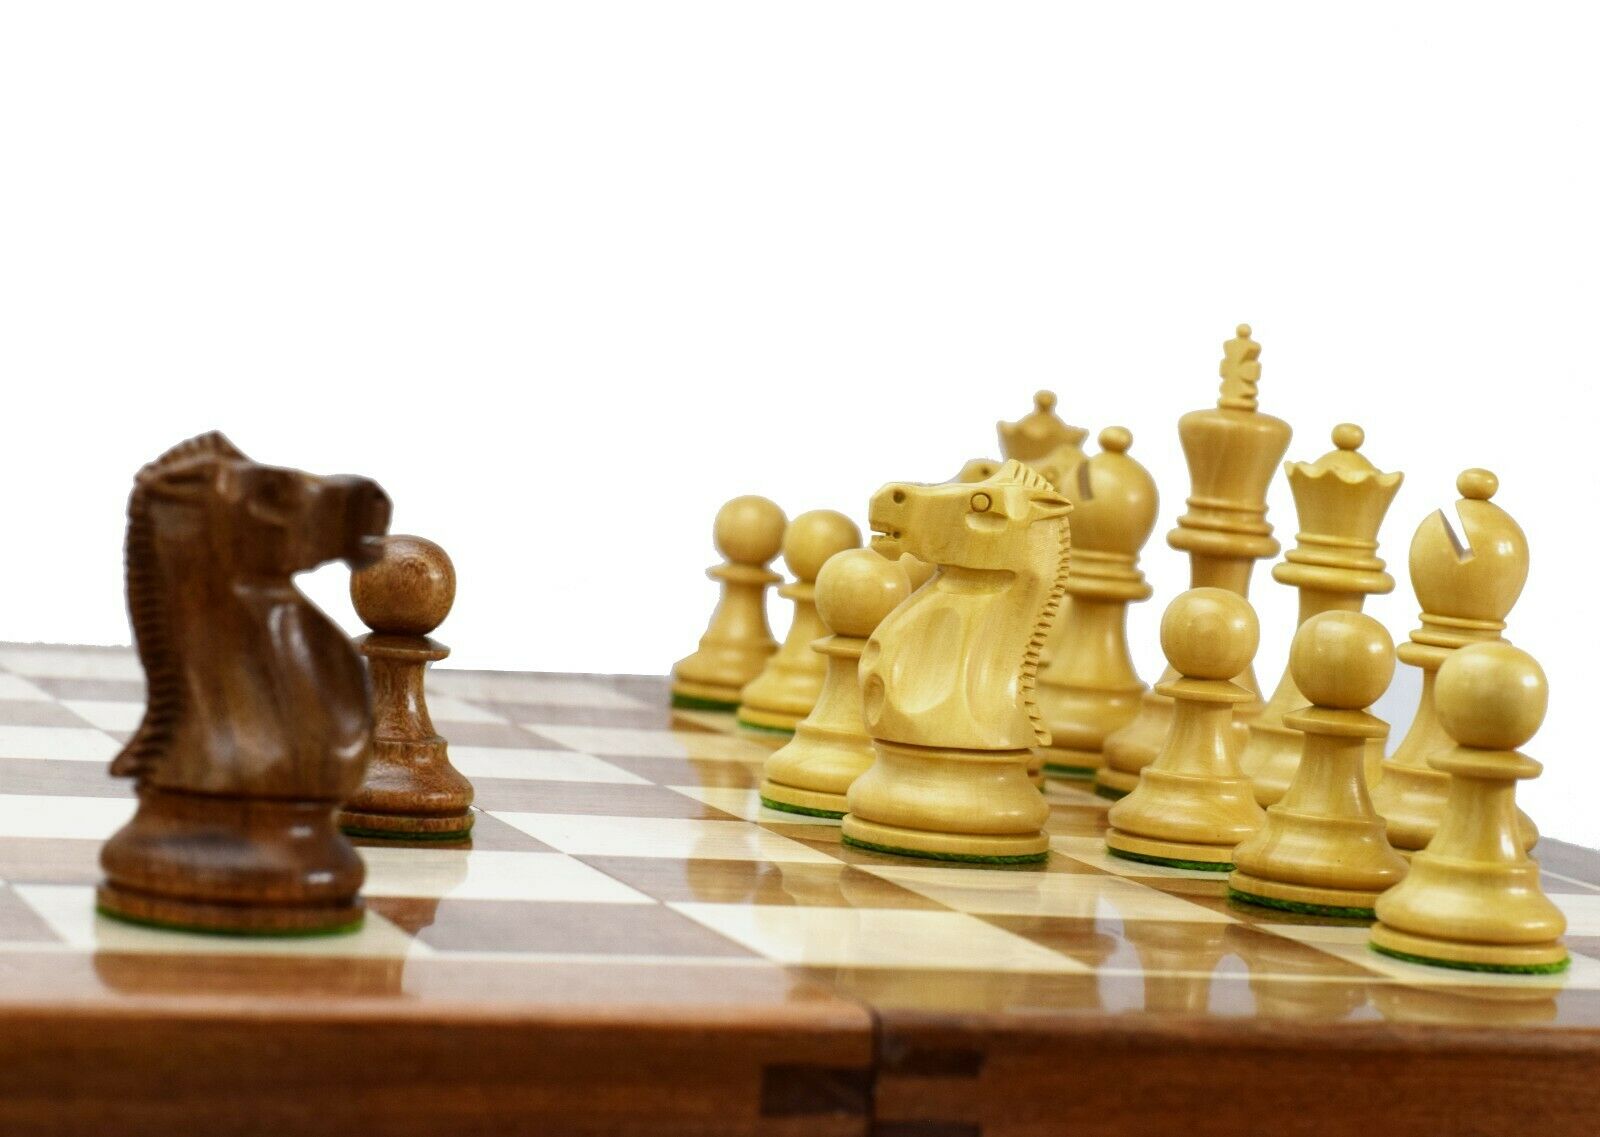 Série Fischer-Spassky (Campeonato Mundial de Xadrez 1972) - Peças